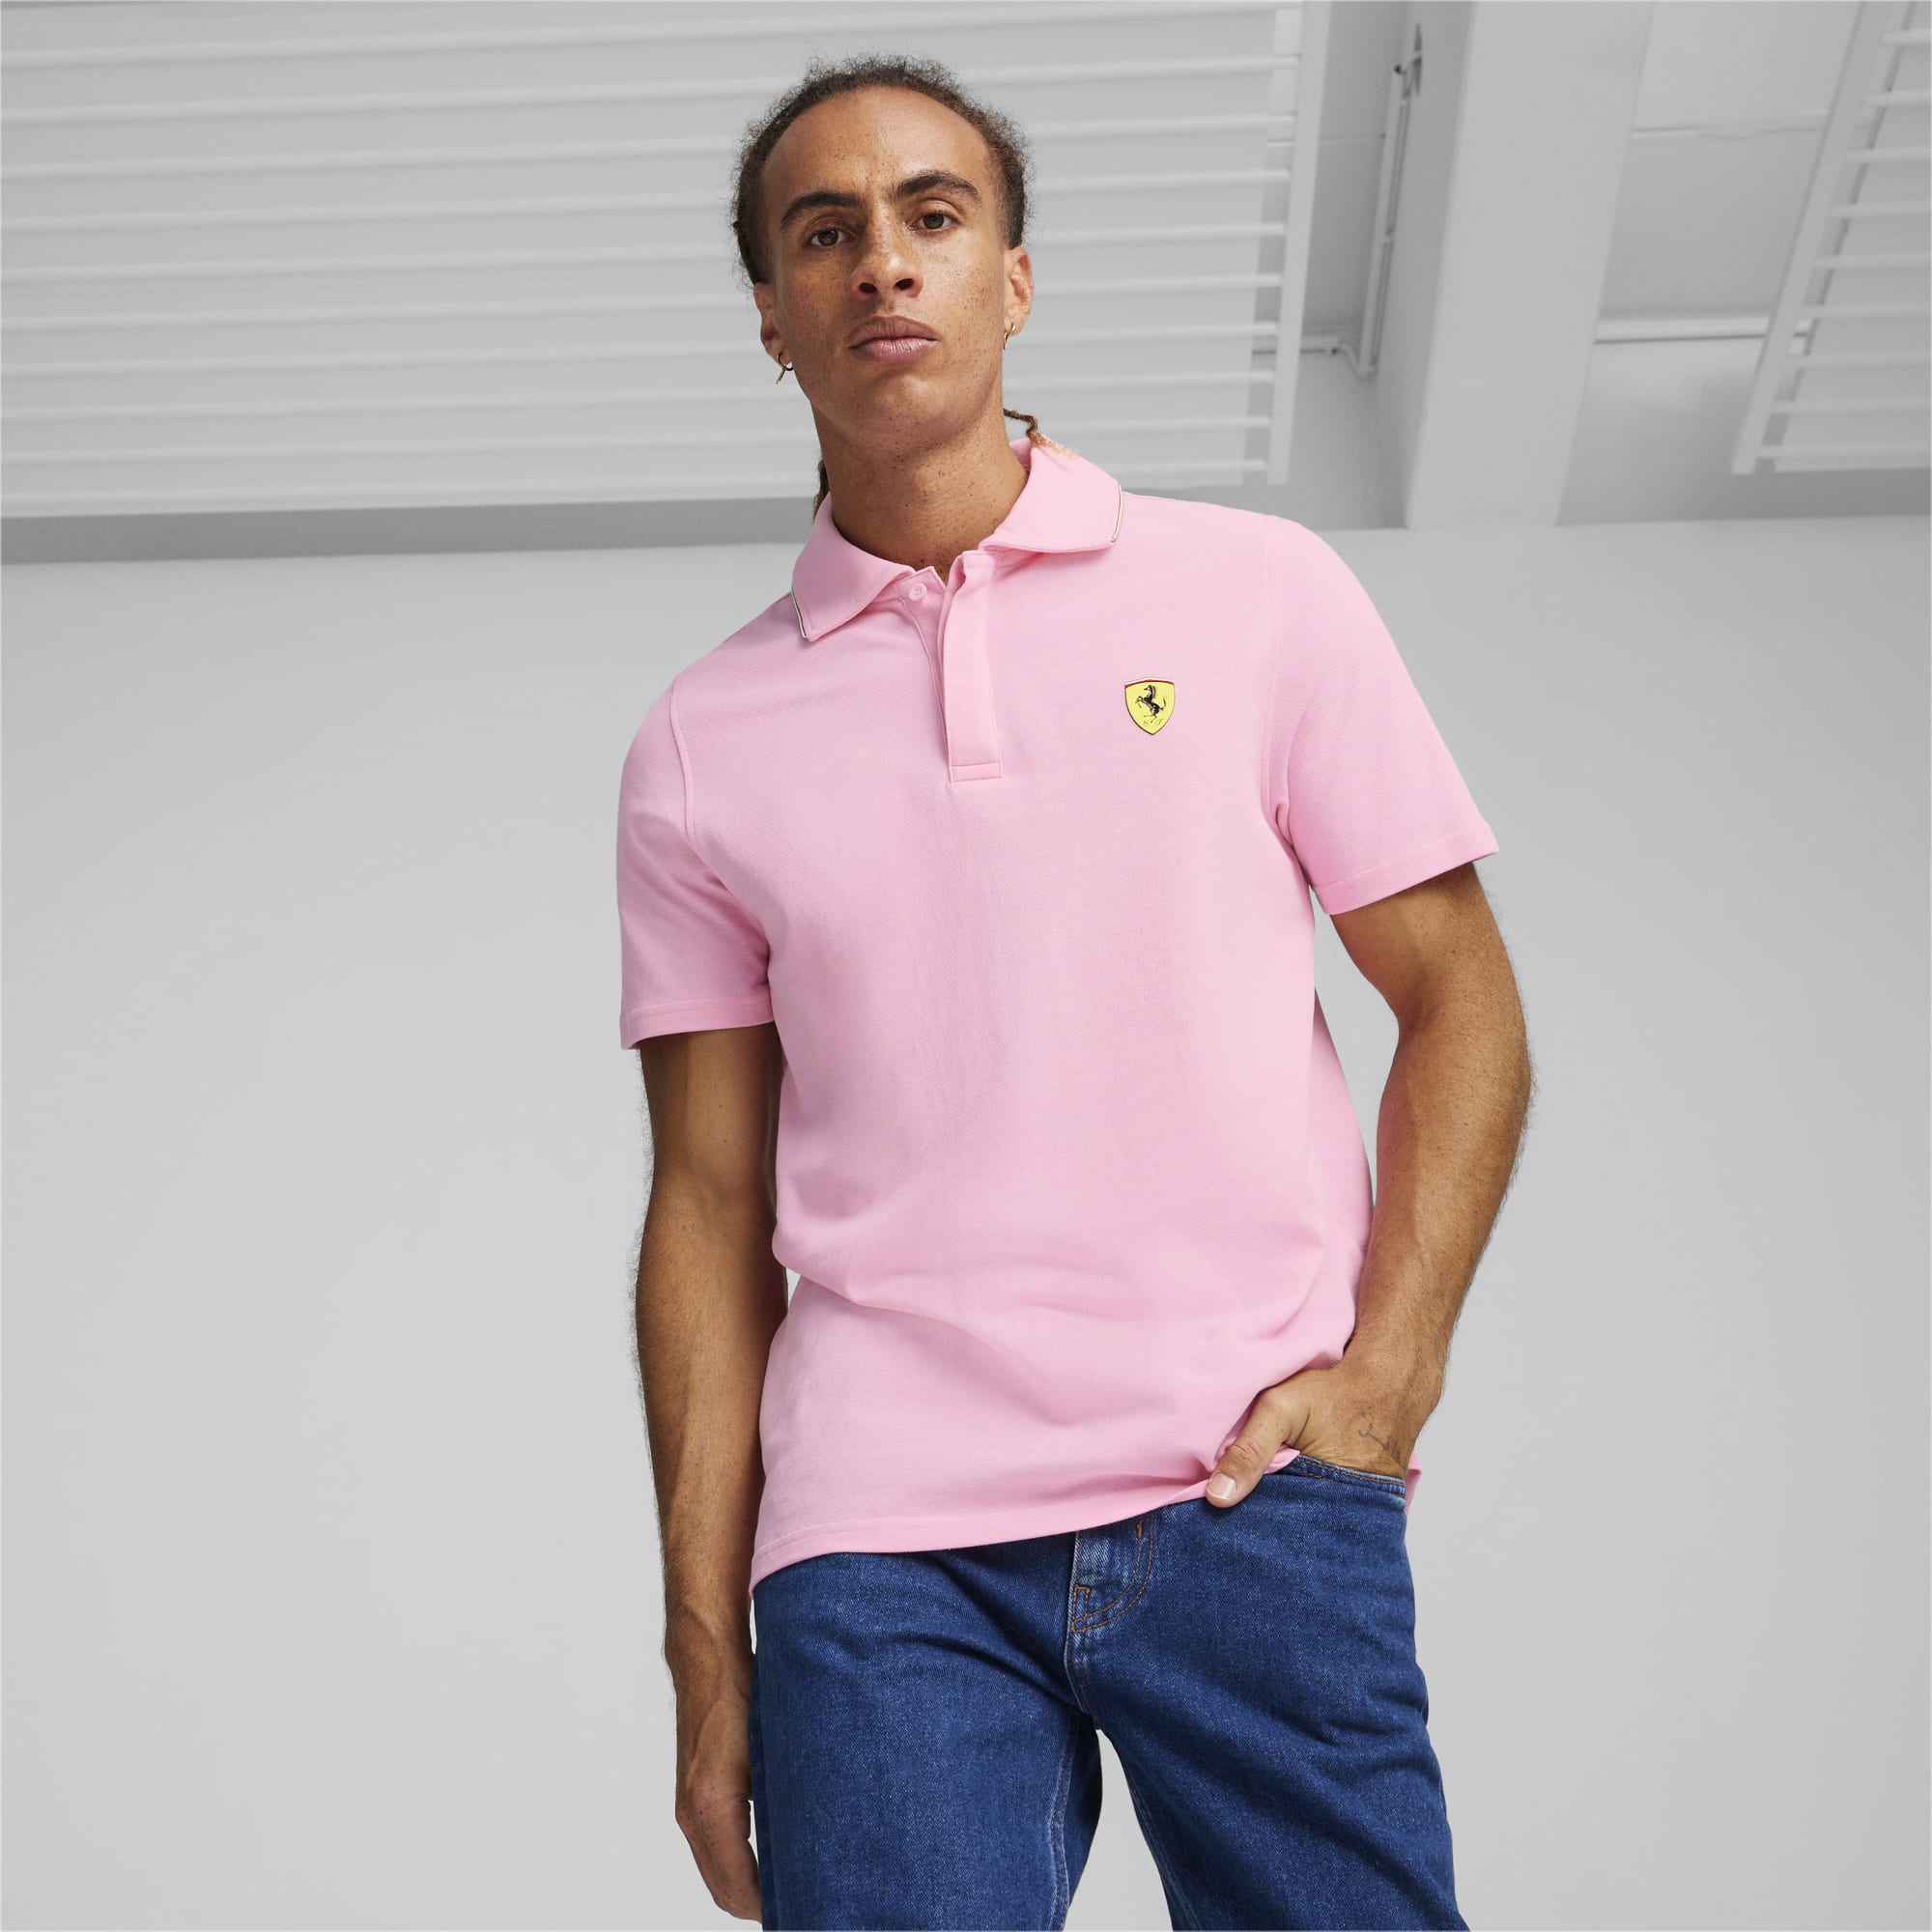 PUMA Scuderia Ferrari Men's Motorsport Race Polo Shirt, Pink Lilac, Size XS, Clothing